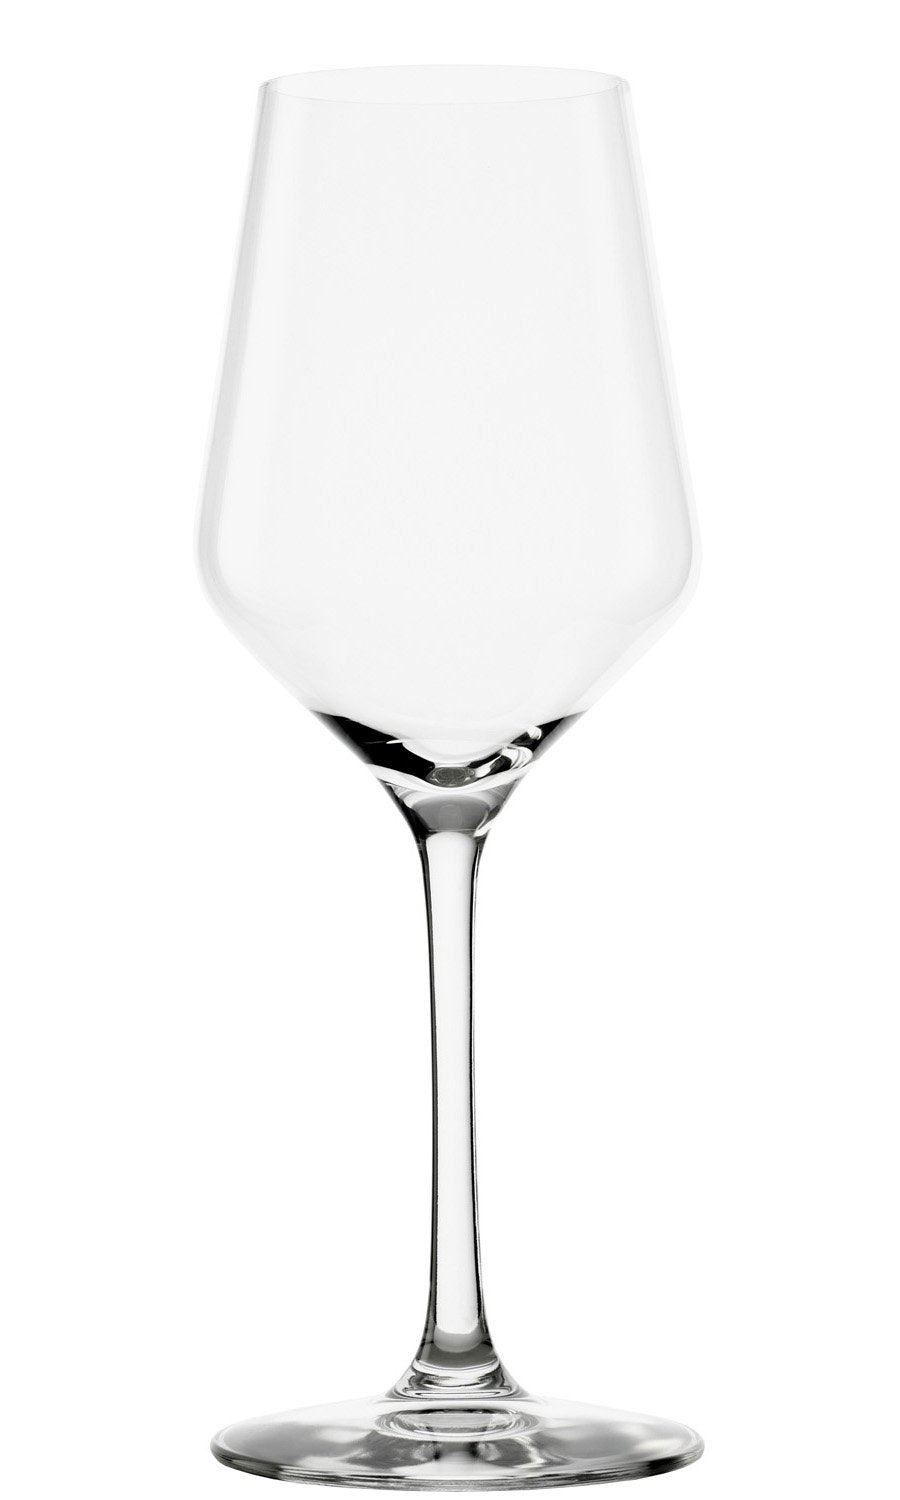 Stoelzle Revolution White Wine Glass Lead Free Crystal